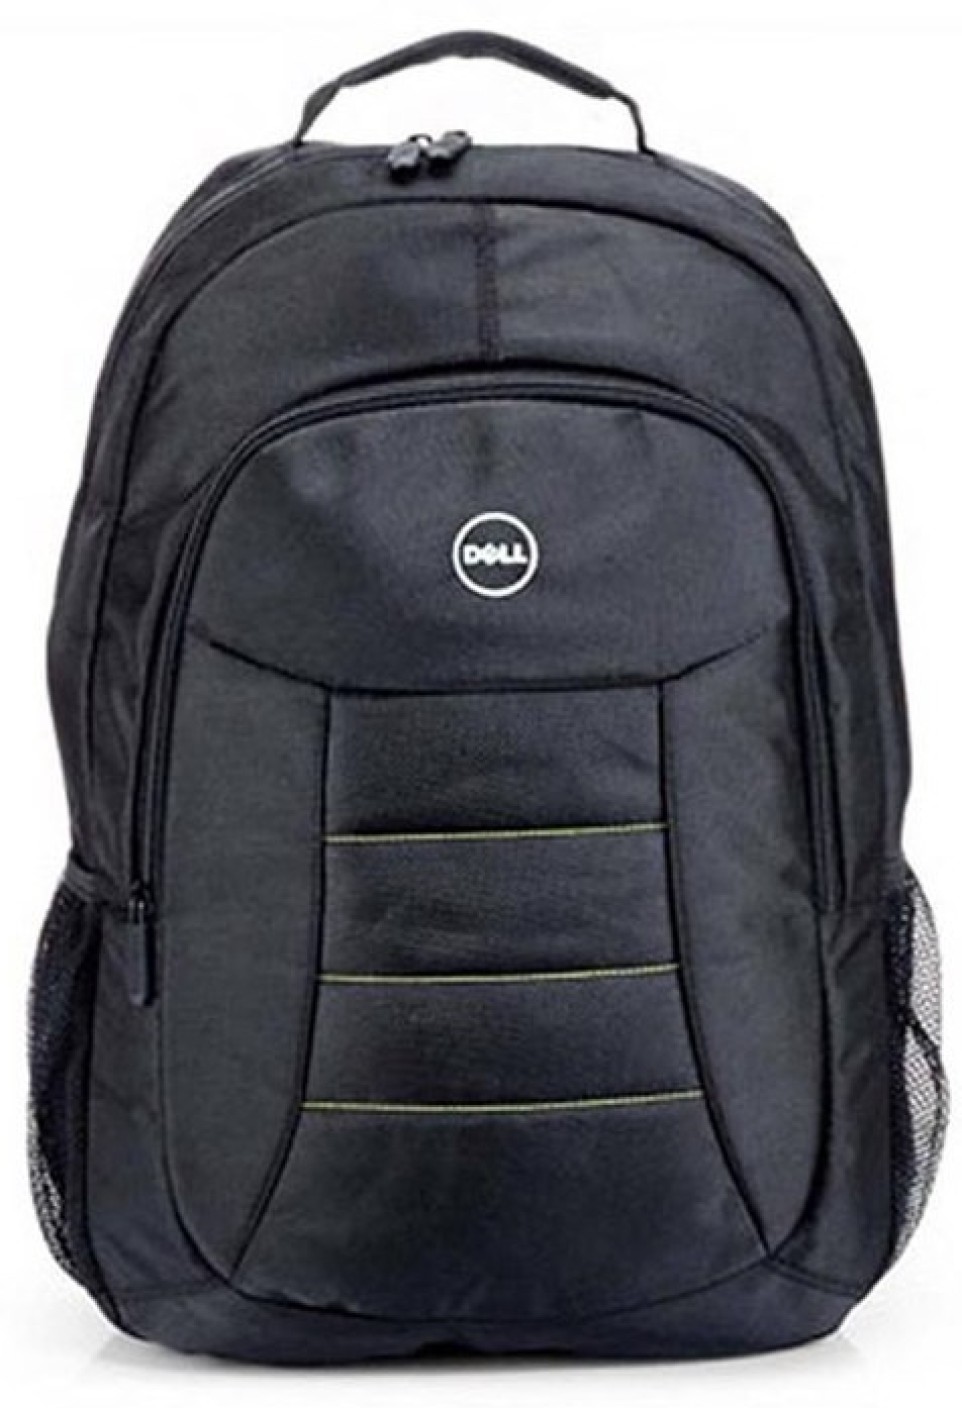 Dell 15.6 inch Laptop Backpack Black - Price in India | Flipkart.com